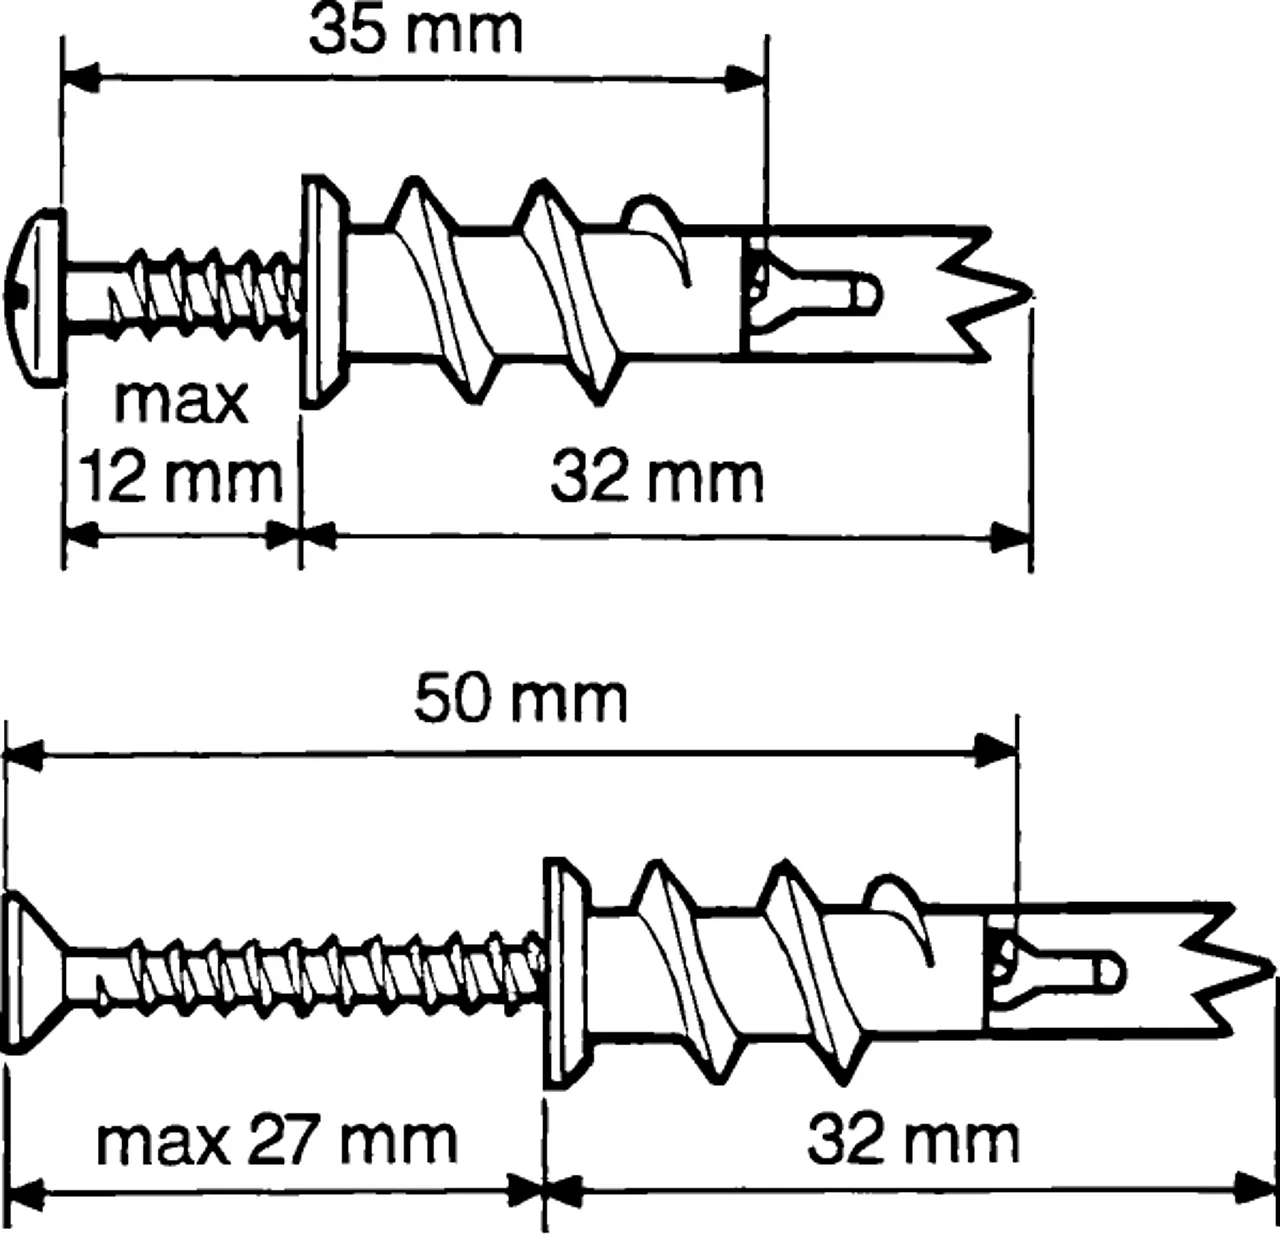 Gipsplugg driva ph 4,5x35 fzb-100 sinkplugg panhode blankforsinket null - null - 2 - Miniatyr